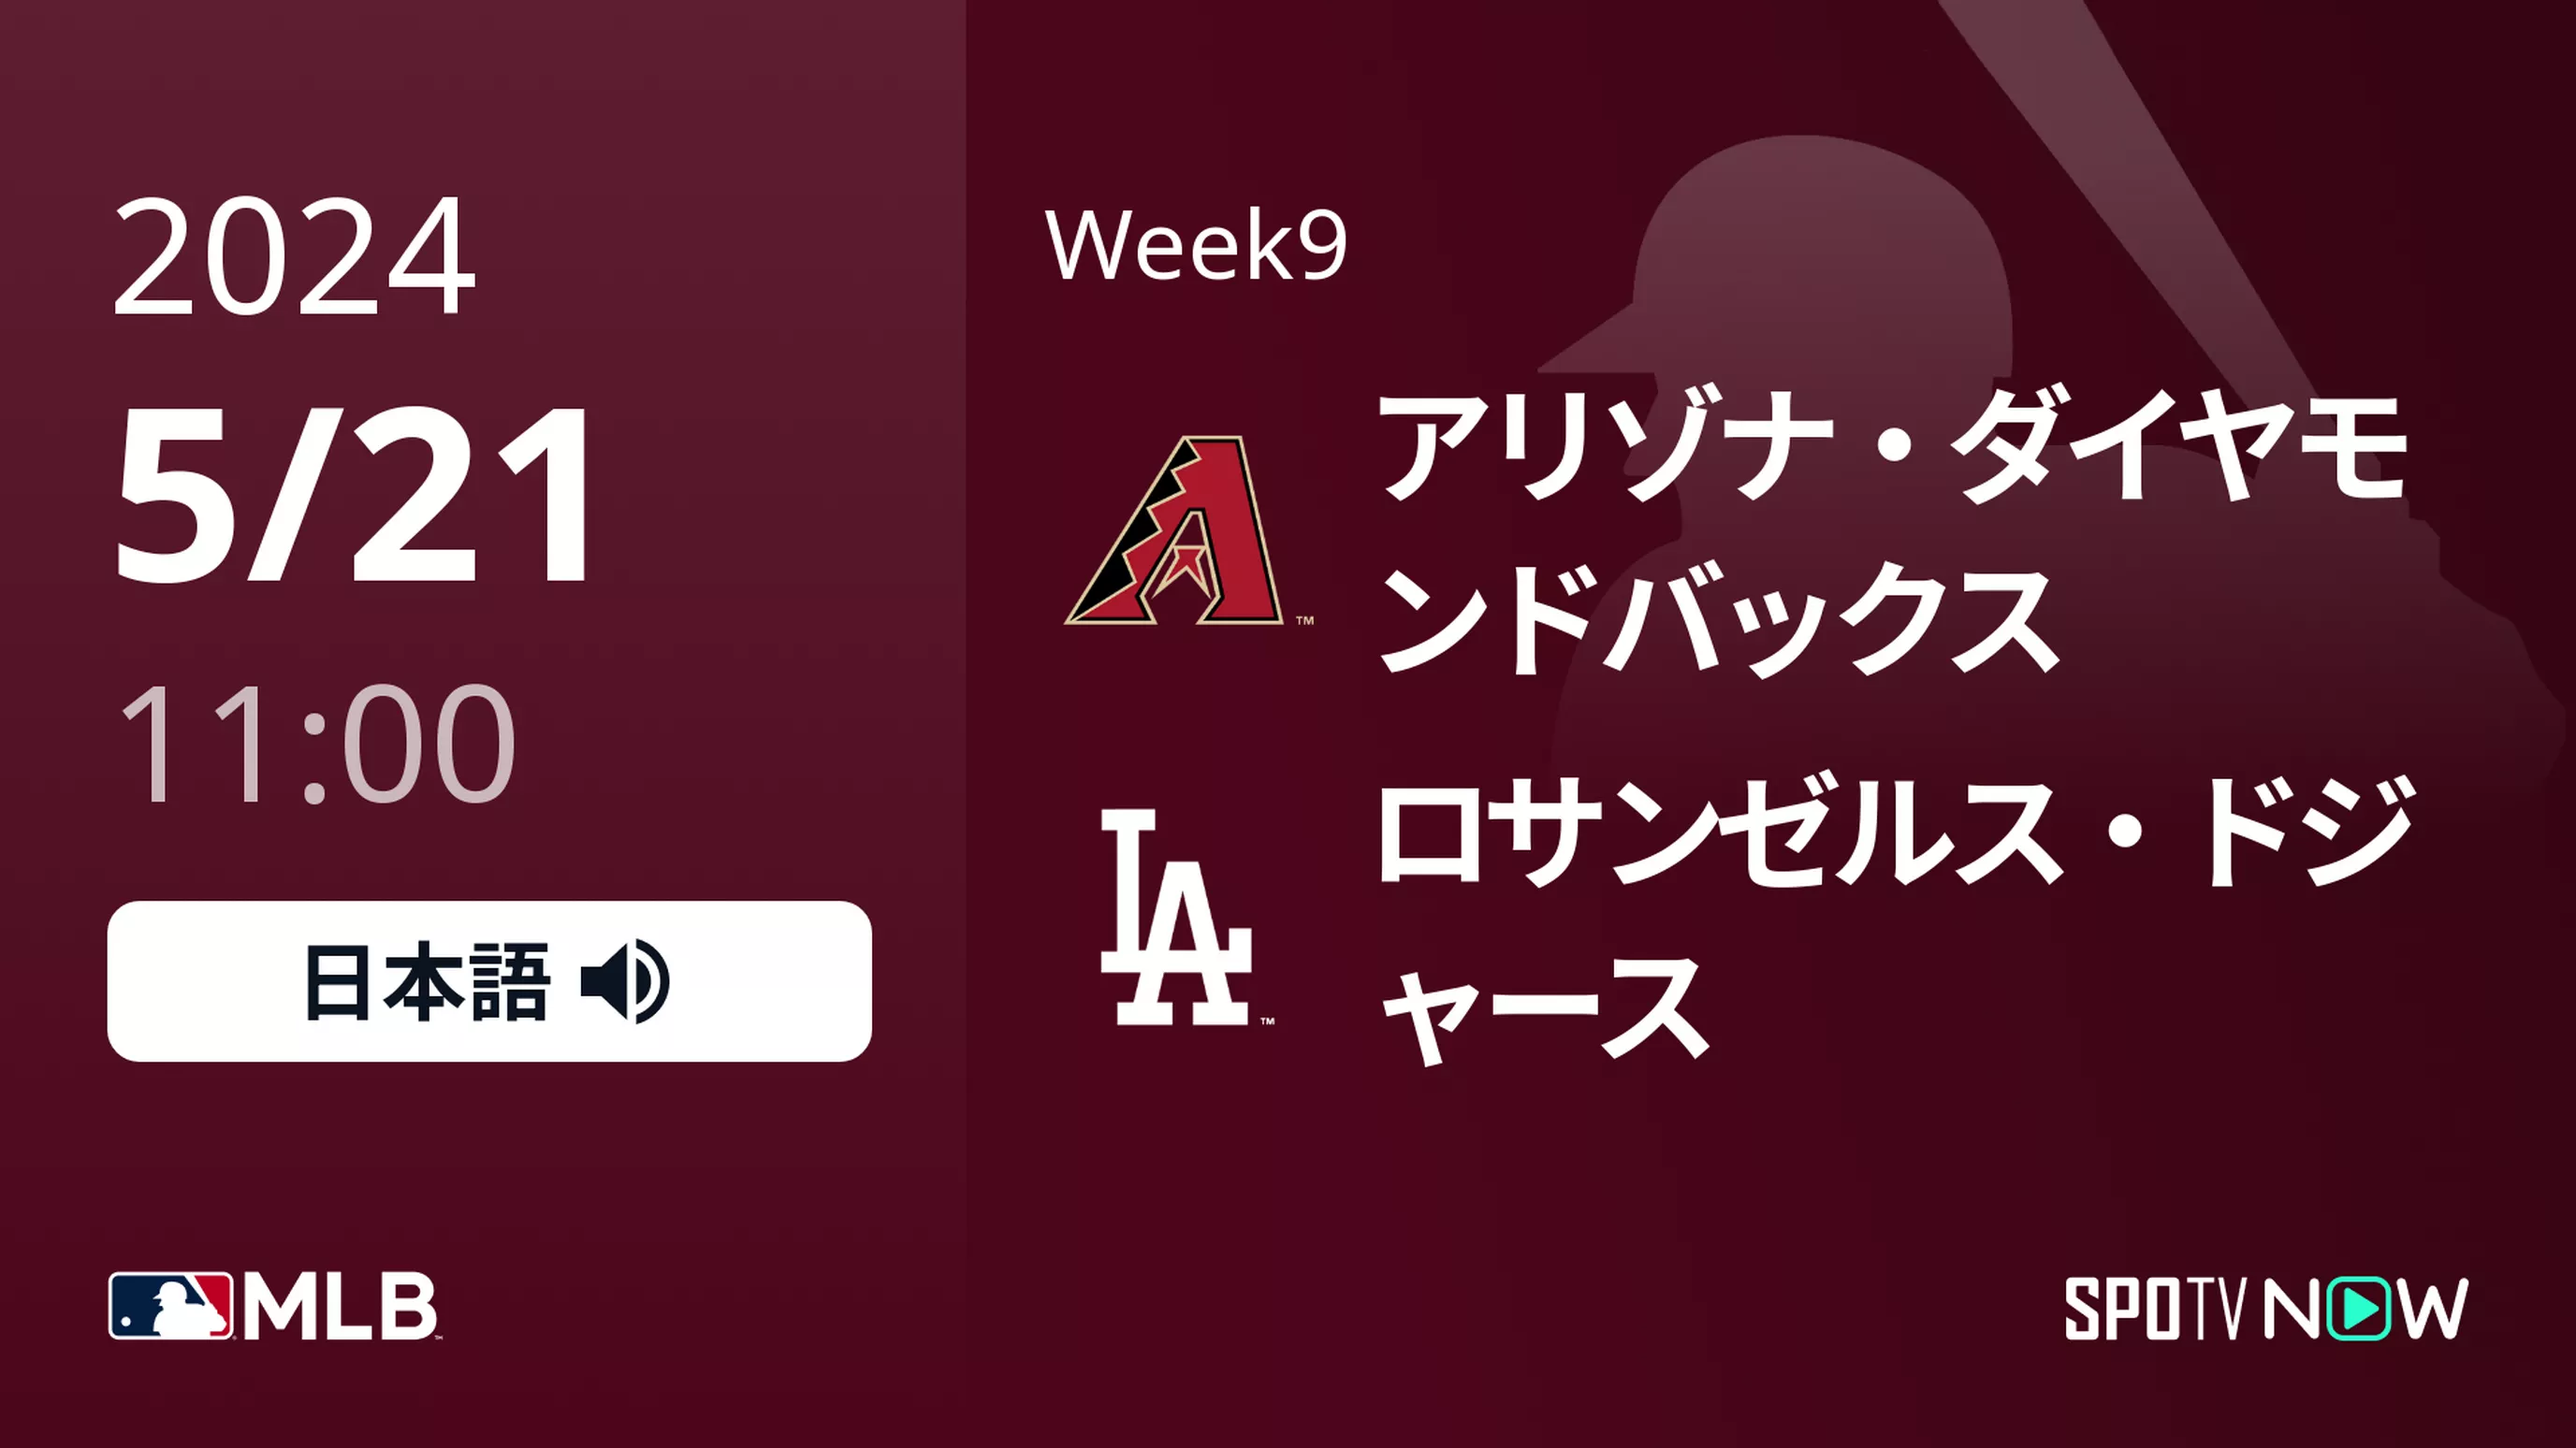 Week9 Dバックス vs ドジャース 5/21[MLB]